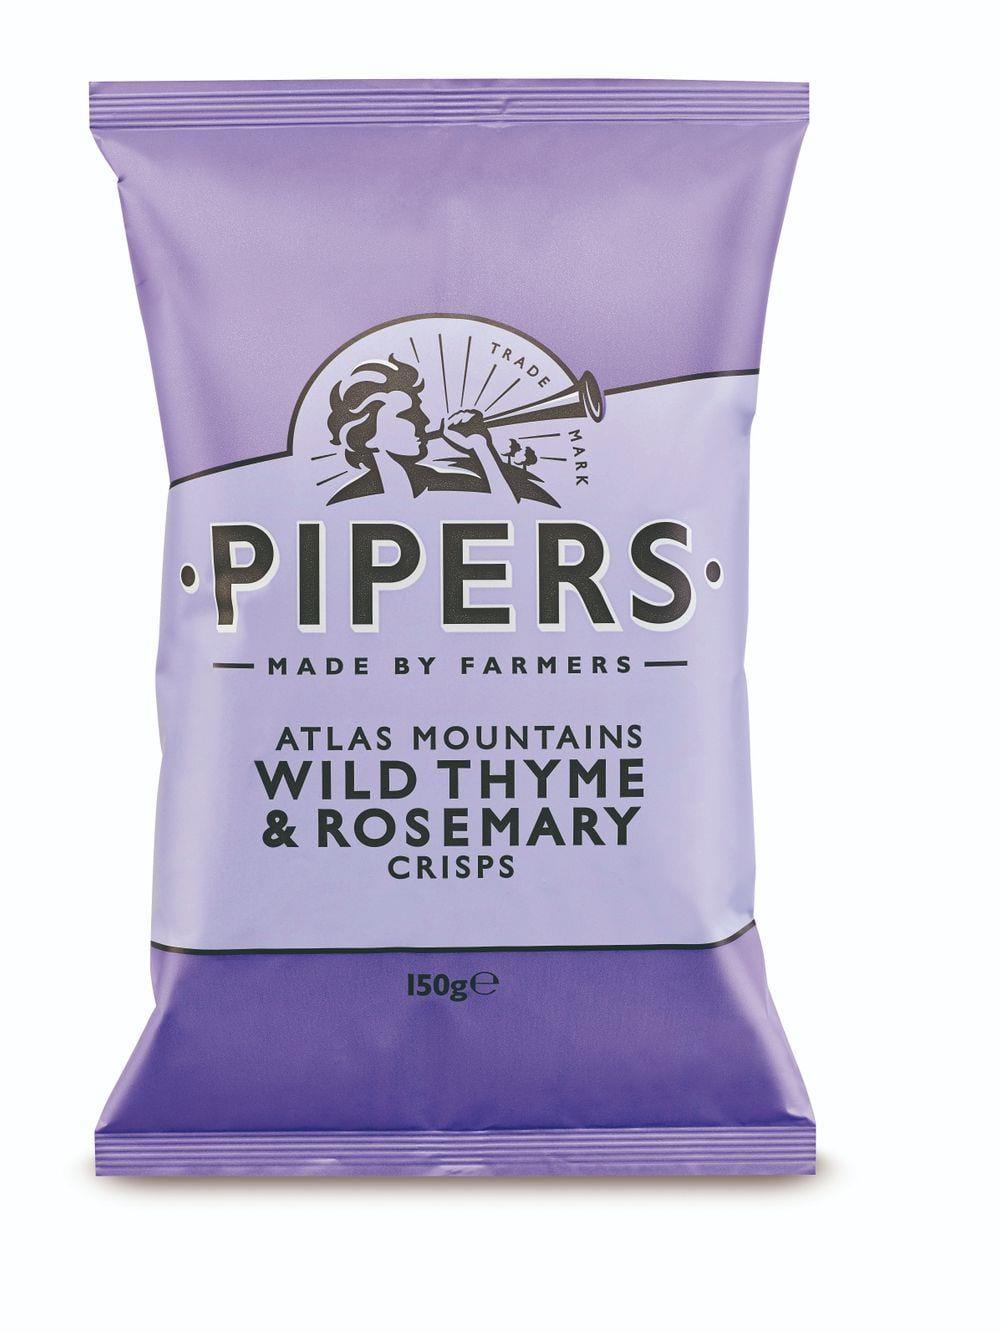 Pipers Atlas Mtn Wild Thyme & Rosemary Crisps 150g - Kitchenalia Westboro